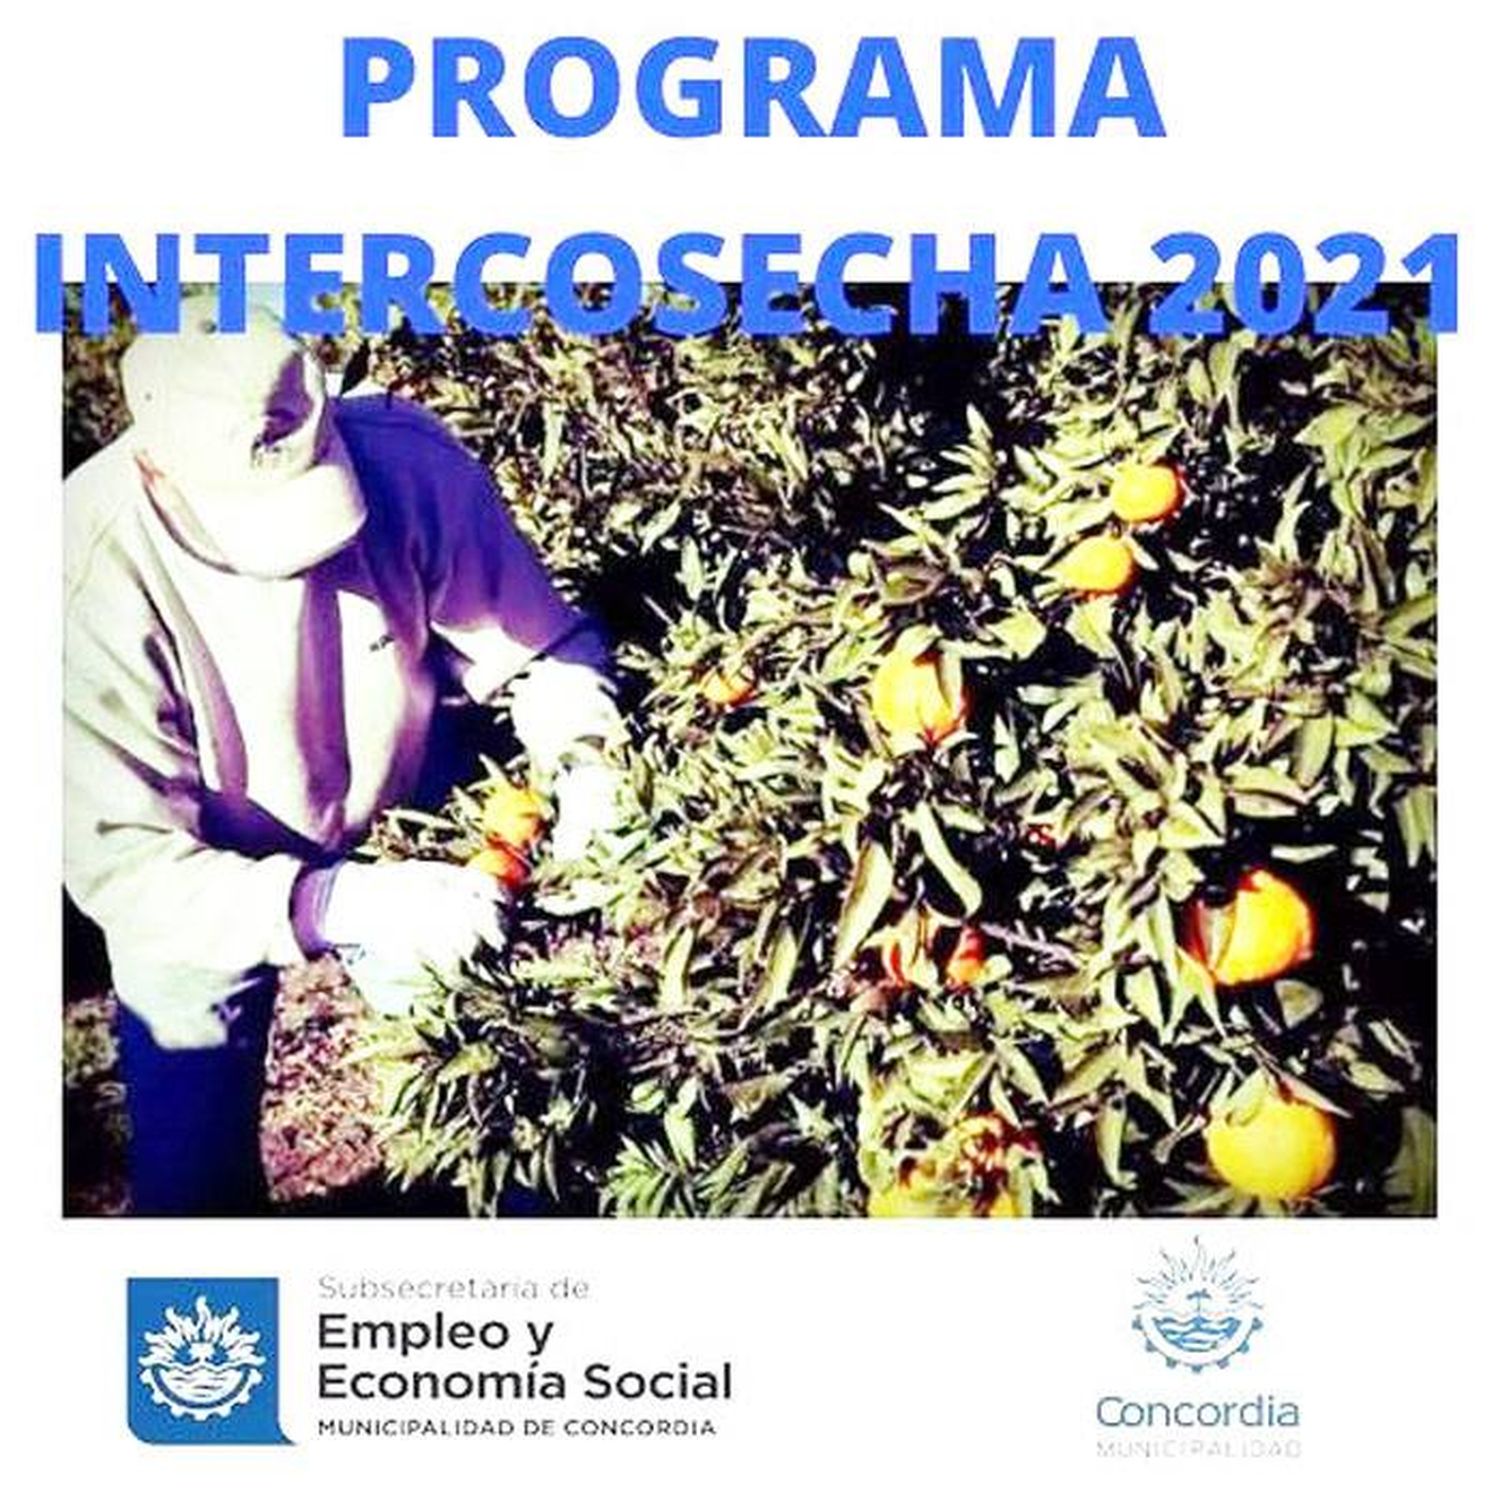 Programa Intercosecha 2021: registro on line